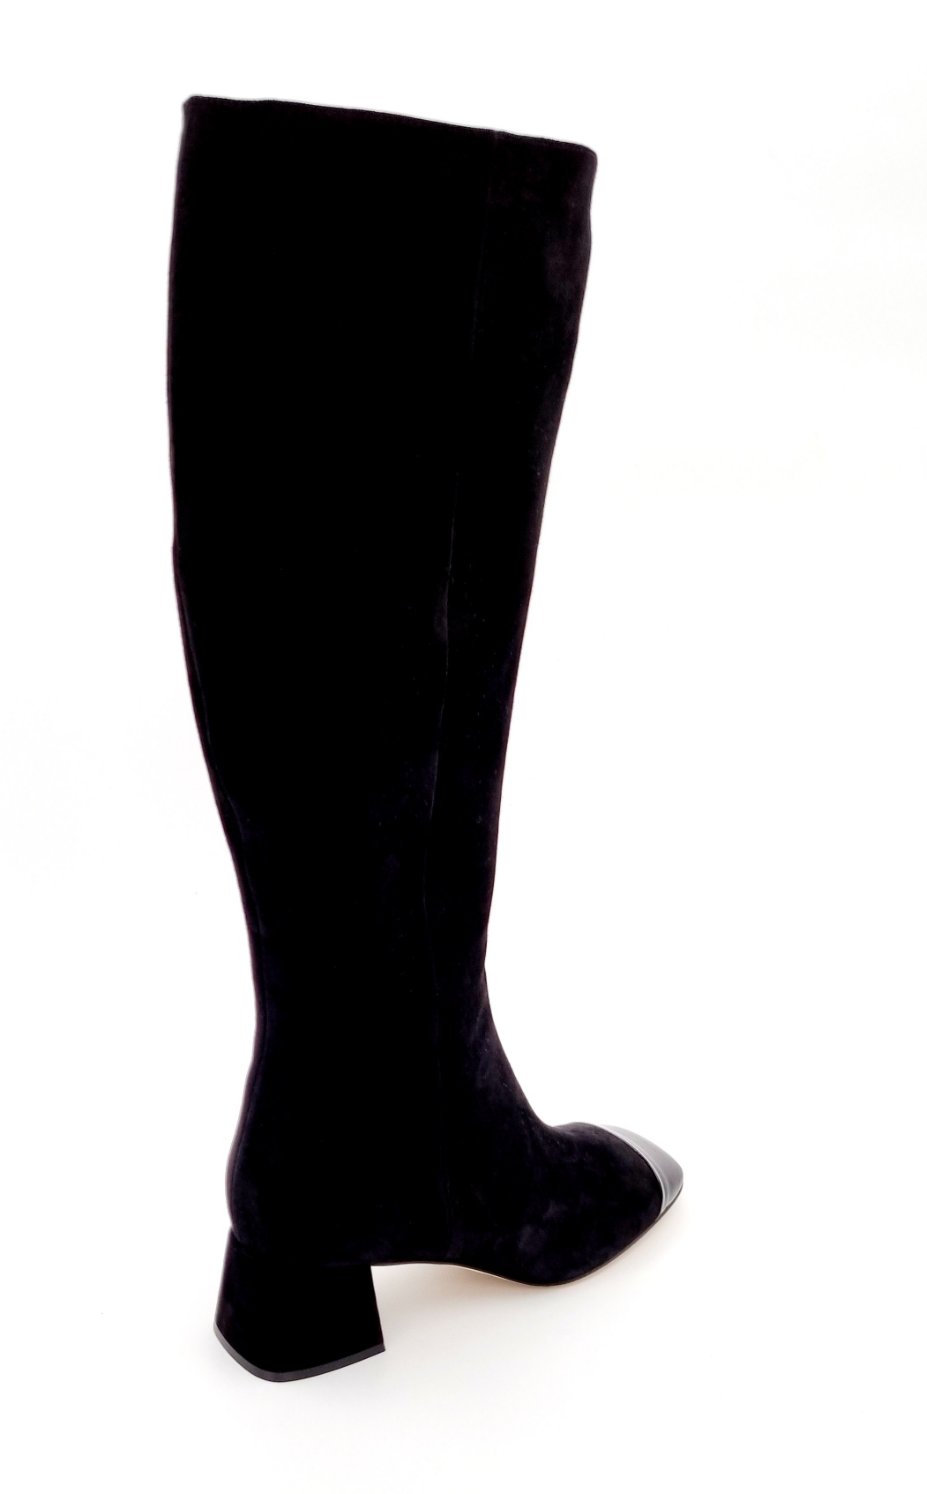 SR Alicia 045 Knee-High Suede Boots - SERGIO ROSSI - Liberty Shoes Australia